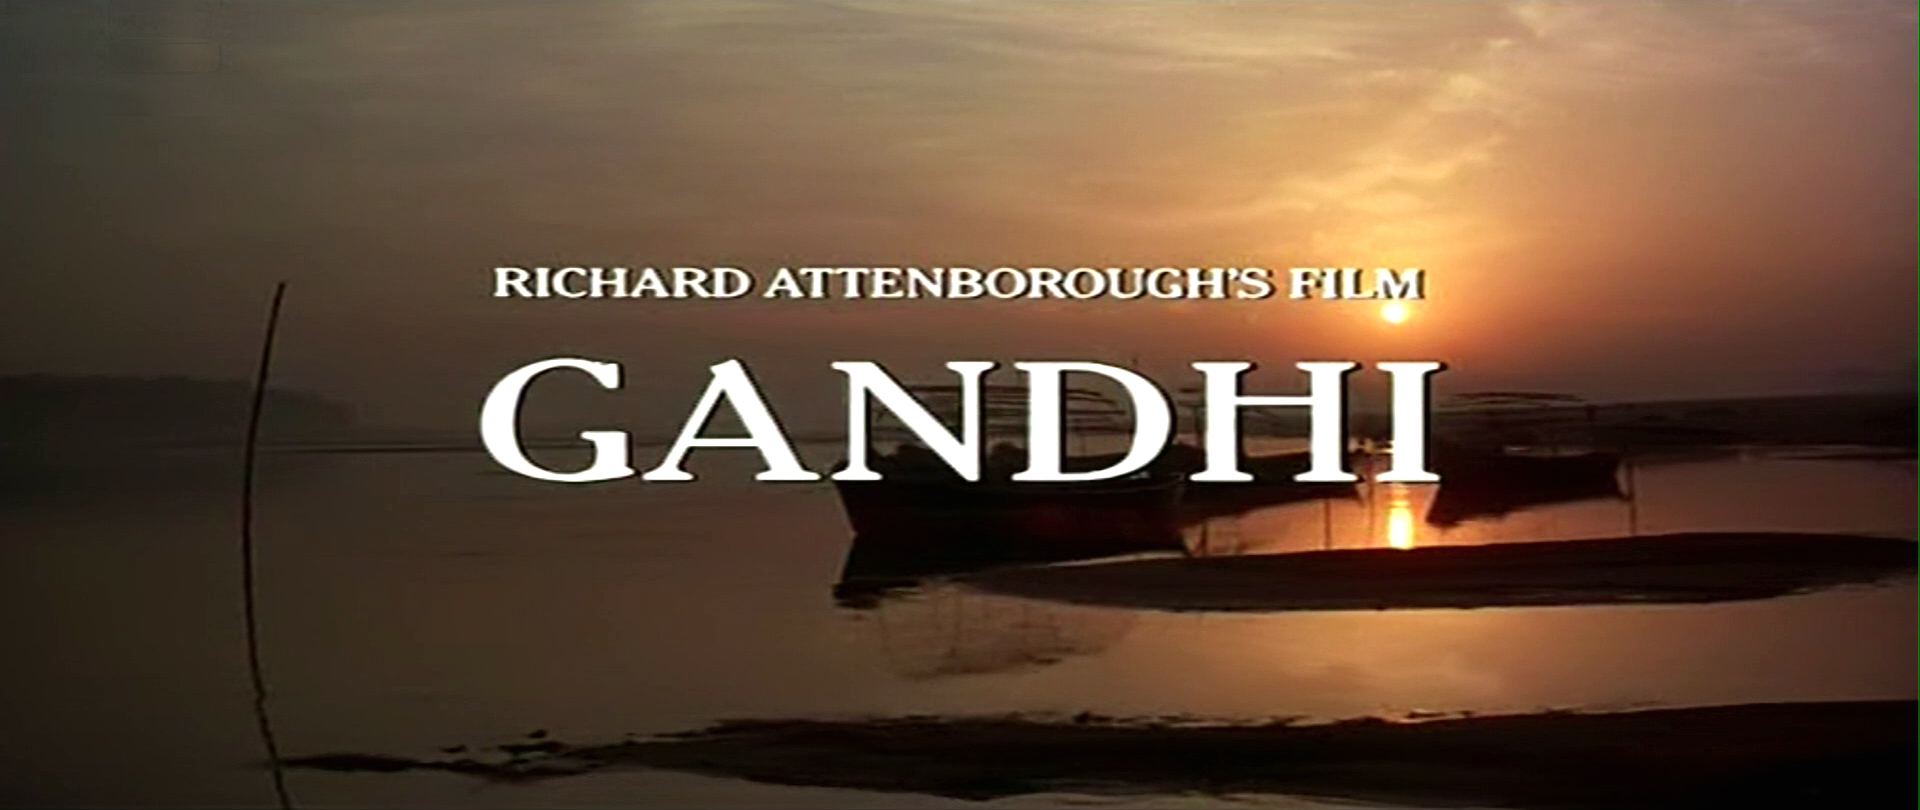 Main title from Gandhi (1982) (3). Richard Attenborough’s film